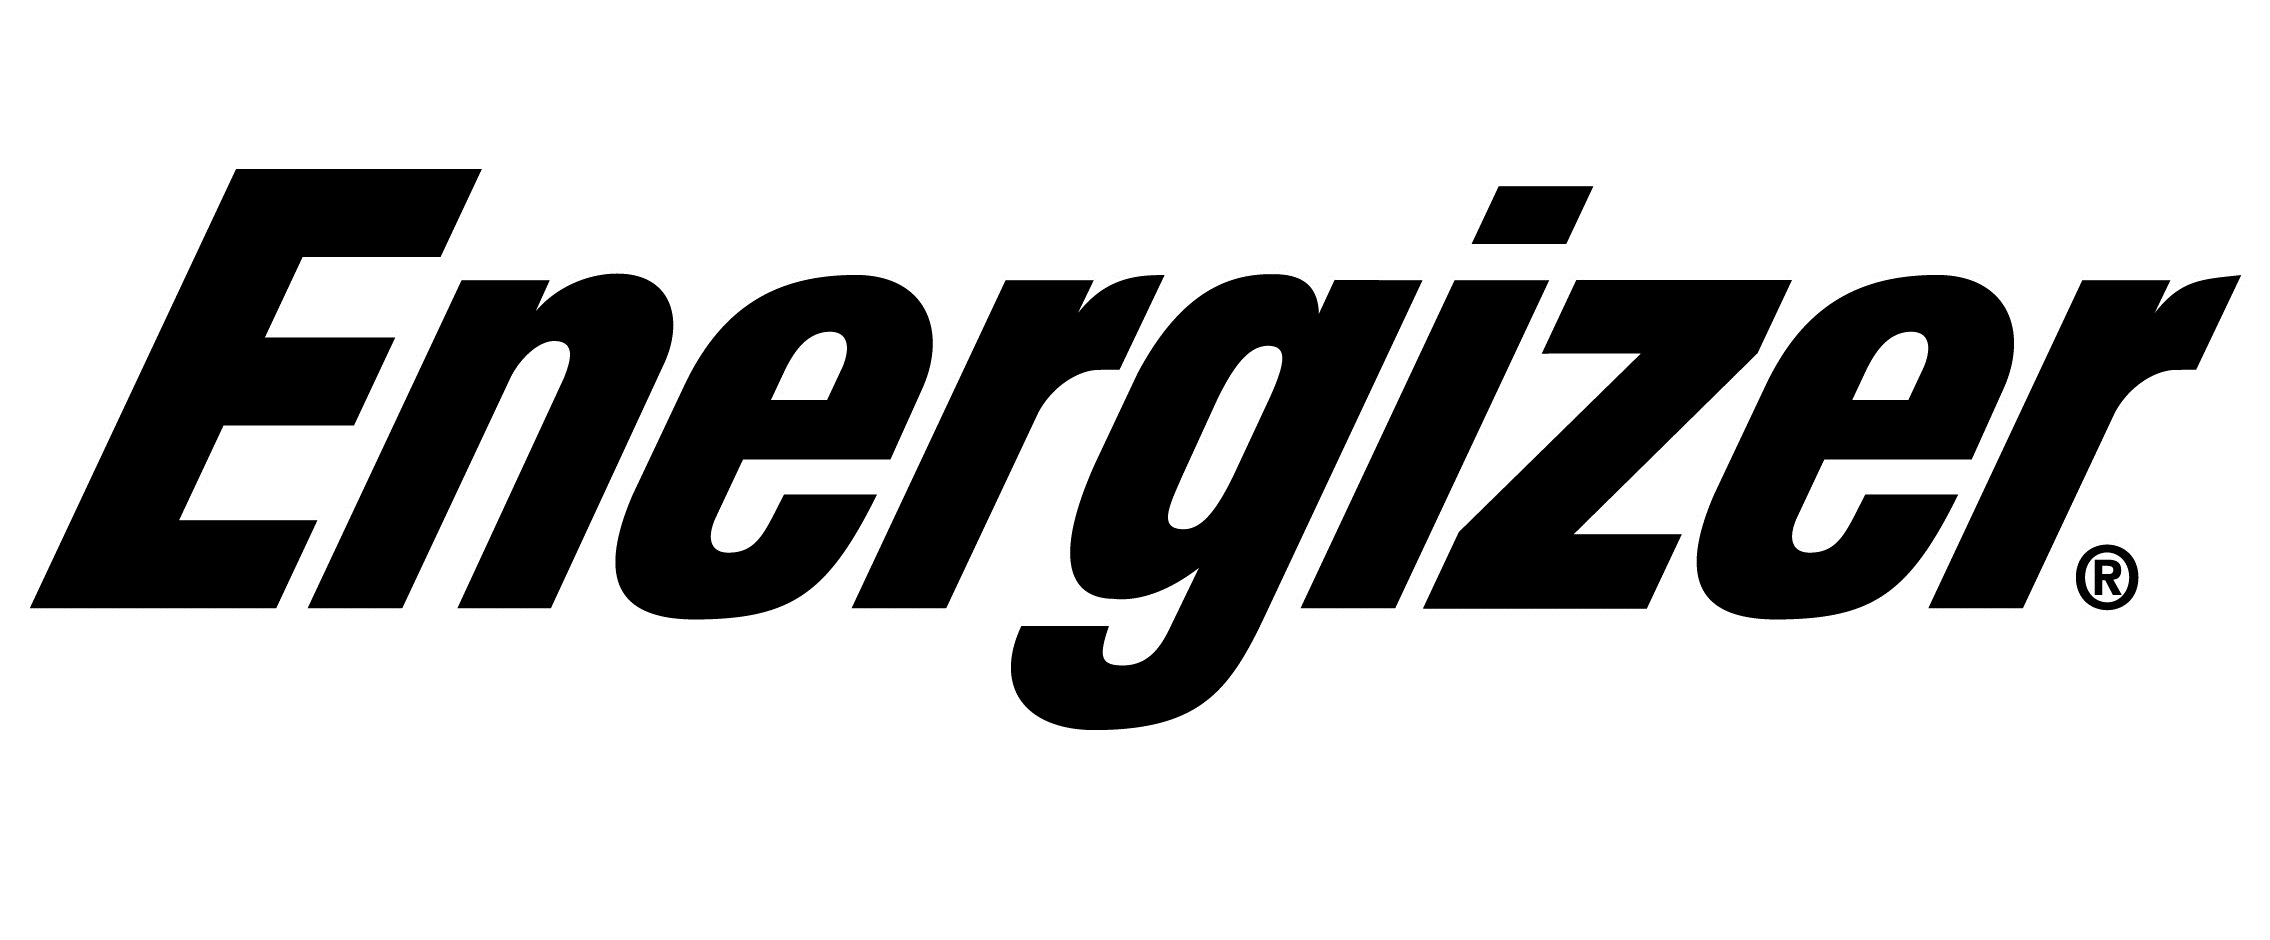 Energizerlogo - Energizer, Transparent background PNG HD thumbnail